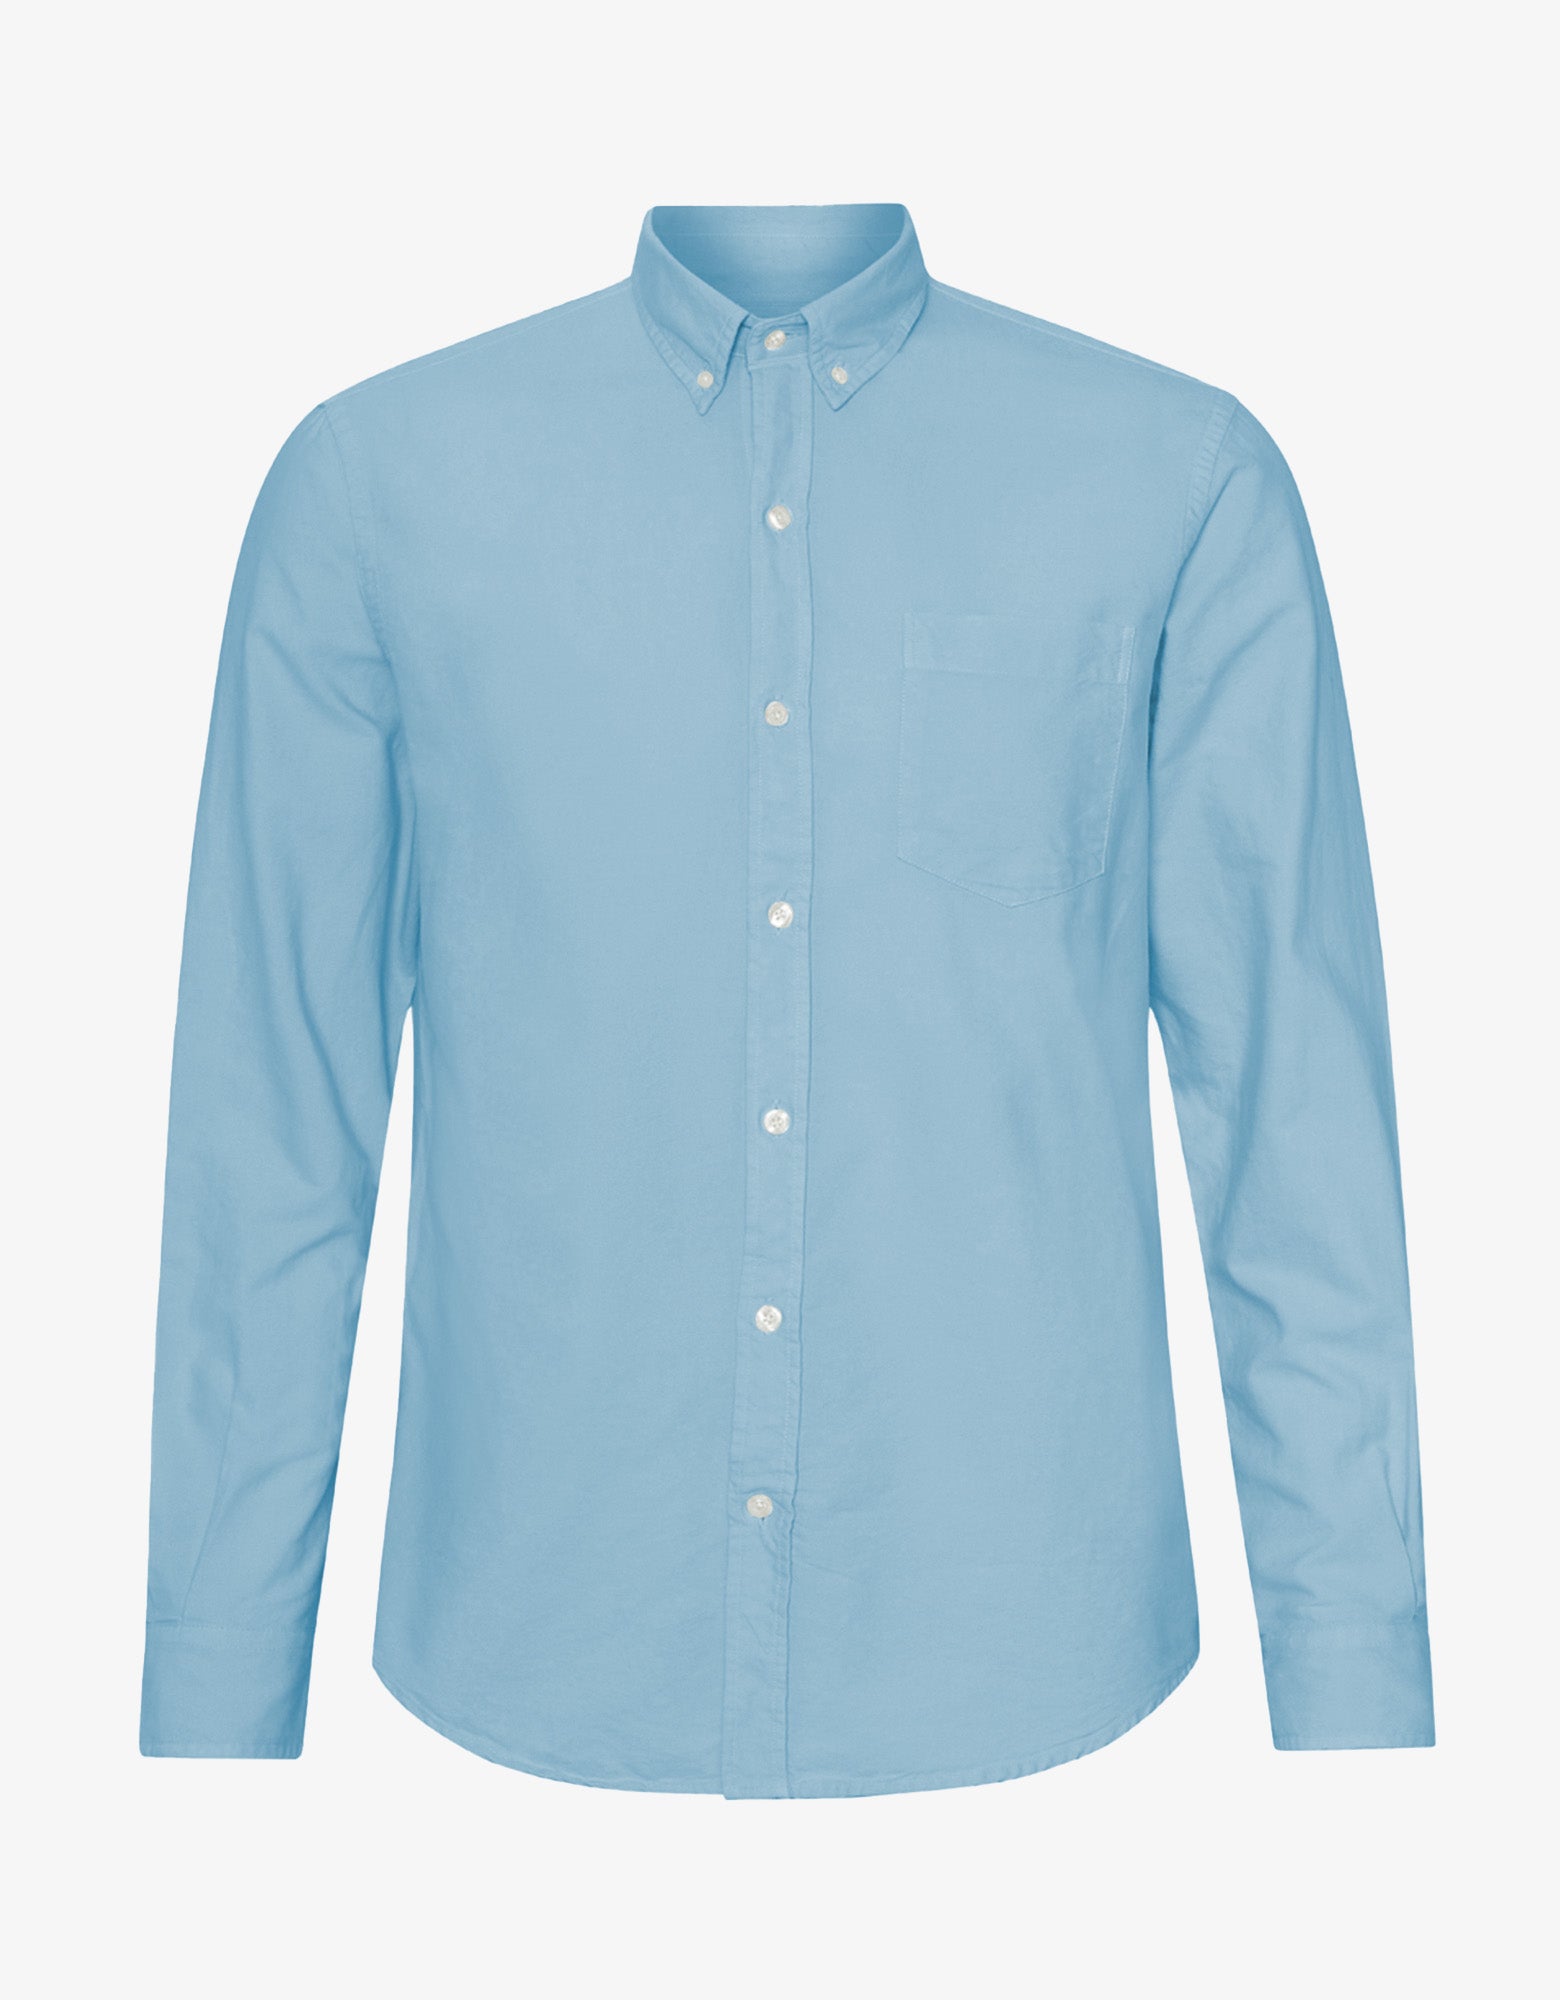 Organic Button Down Shirt - Seaside Blue